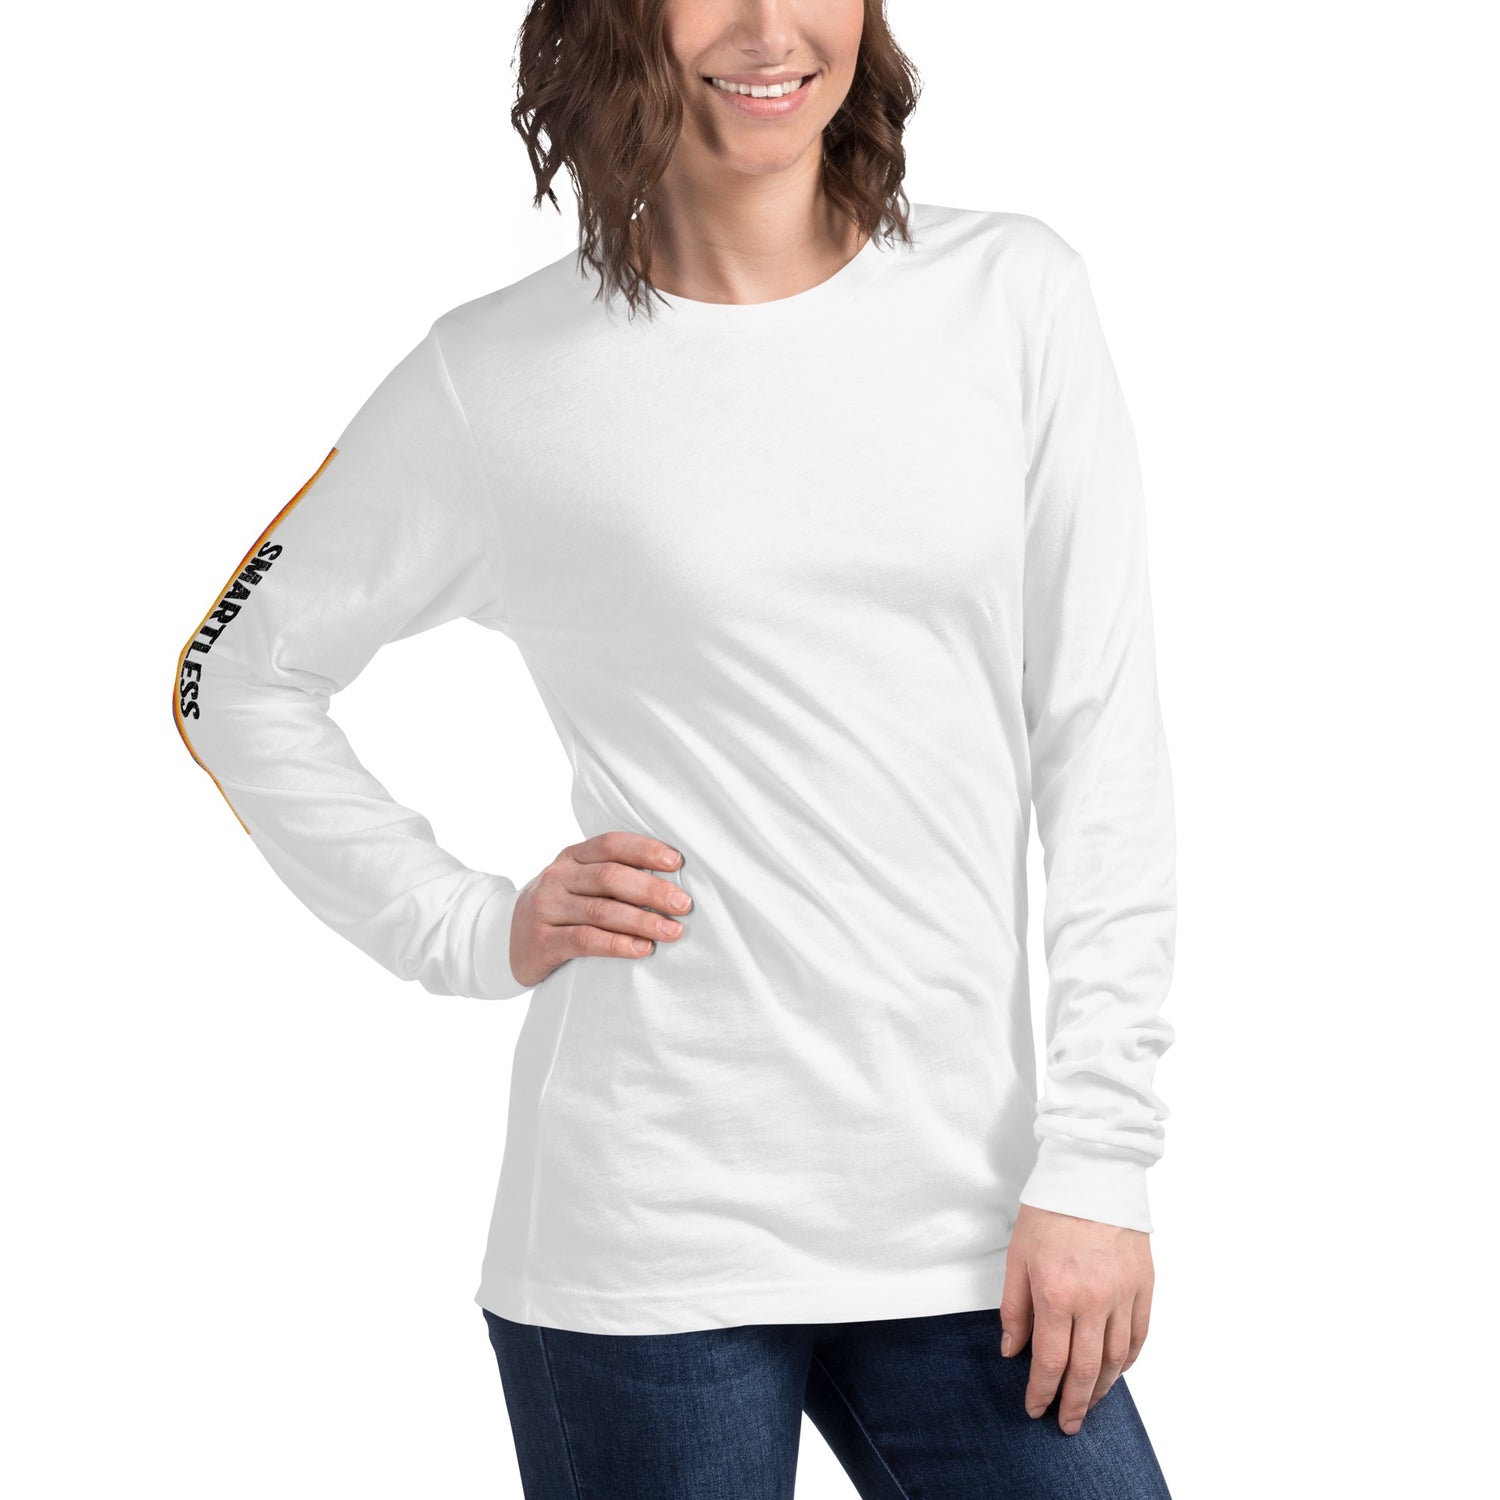 SmartLess Stripes Unisex Long Sleeve T-Shirt